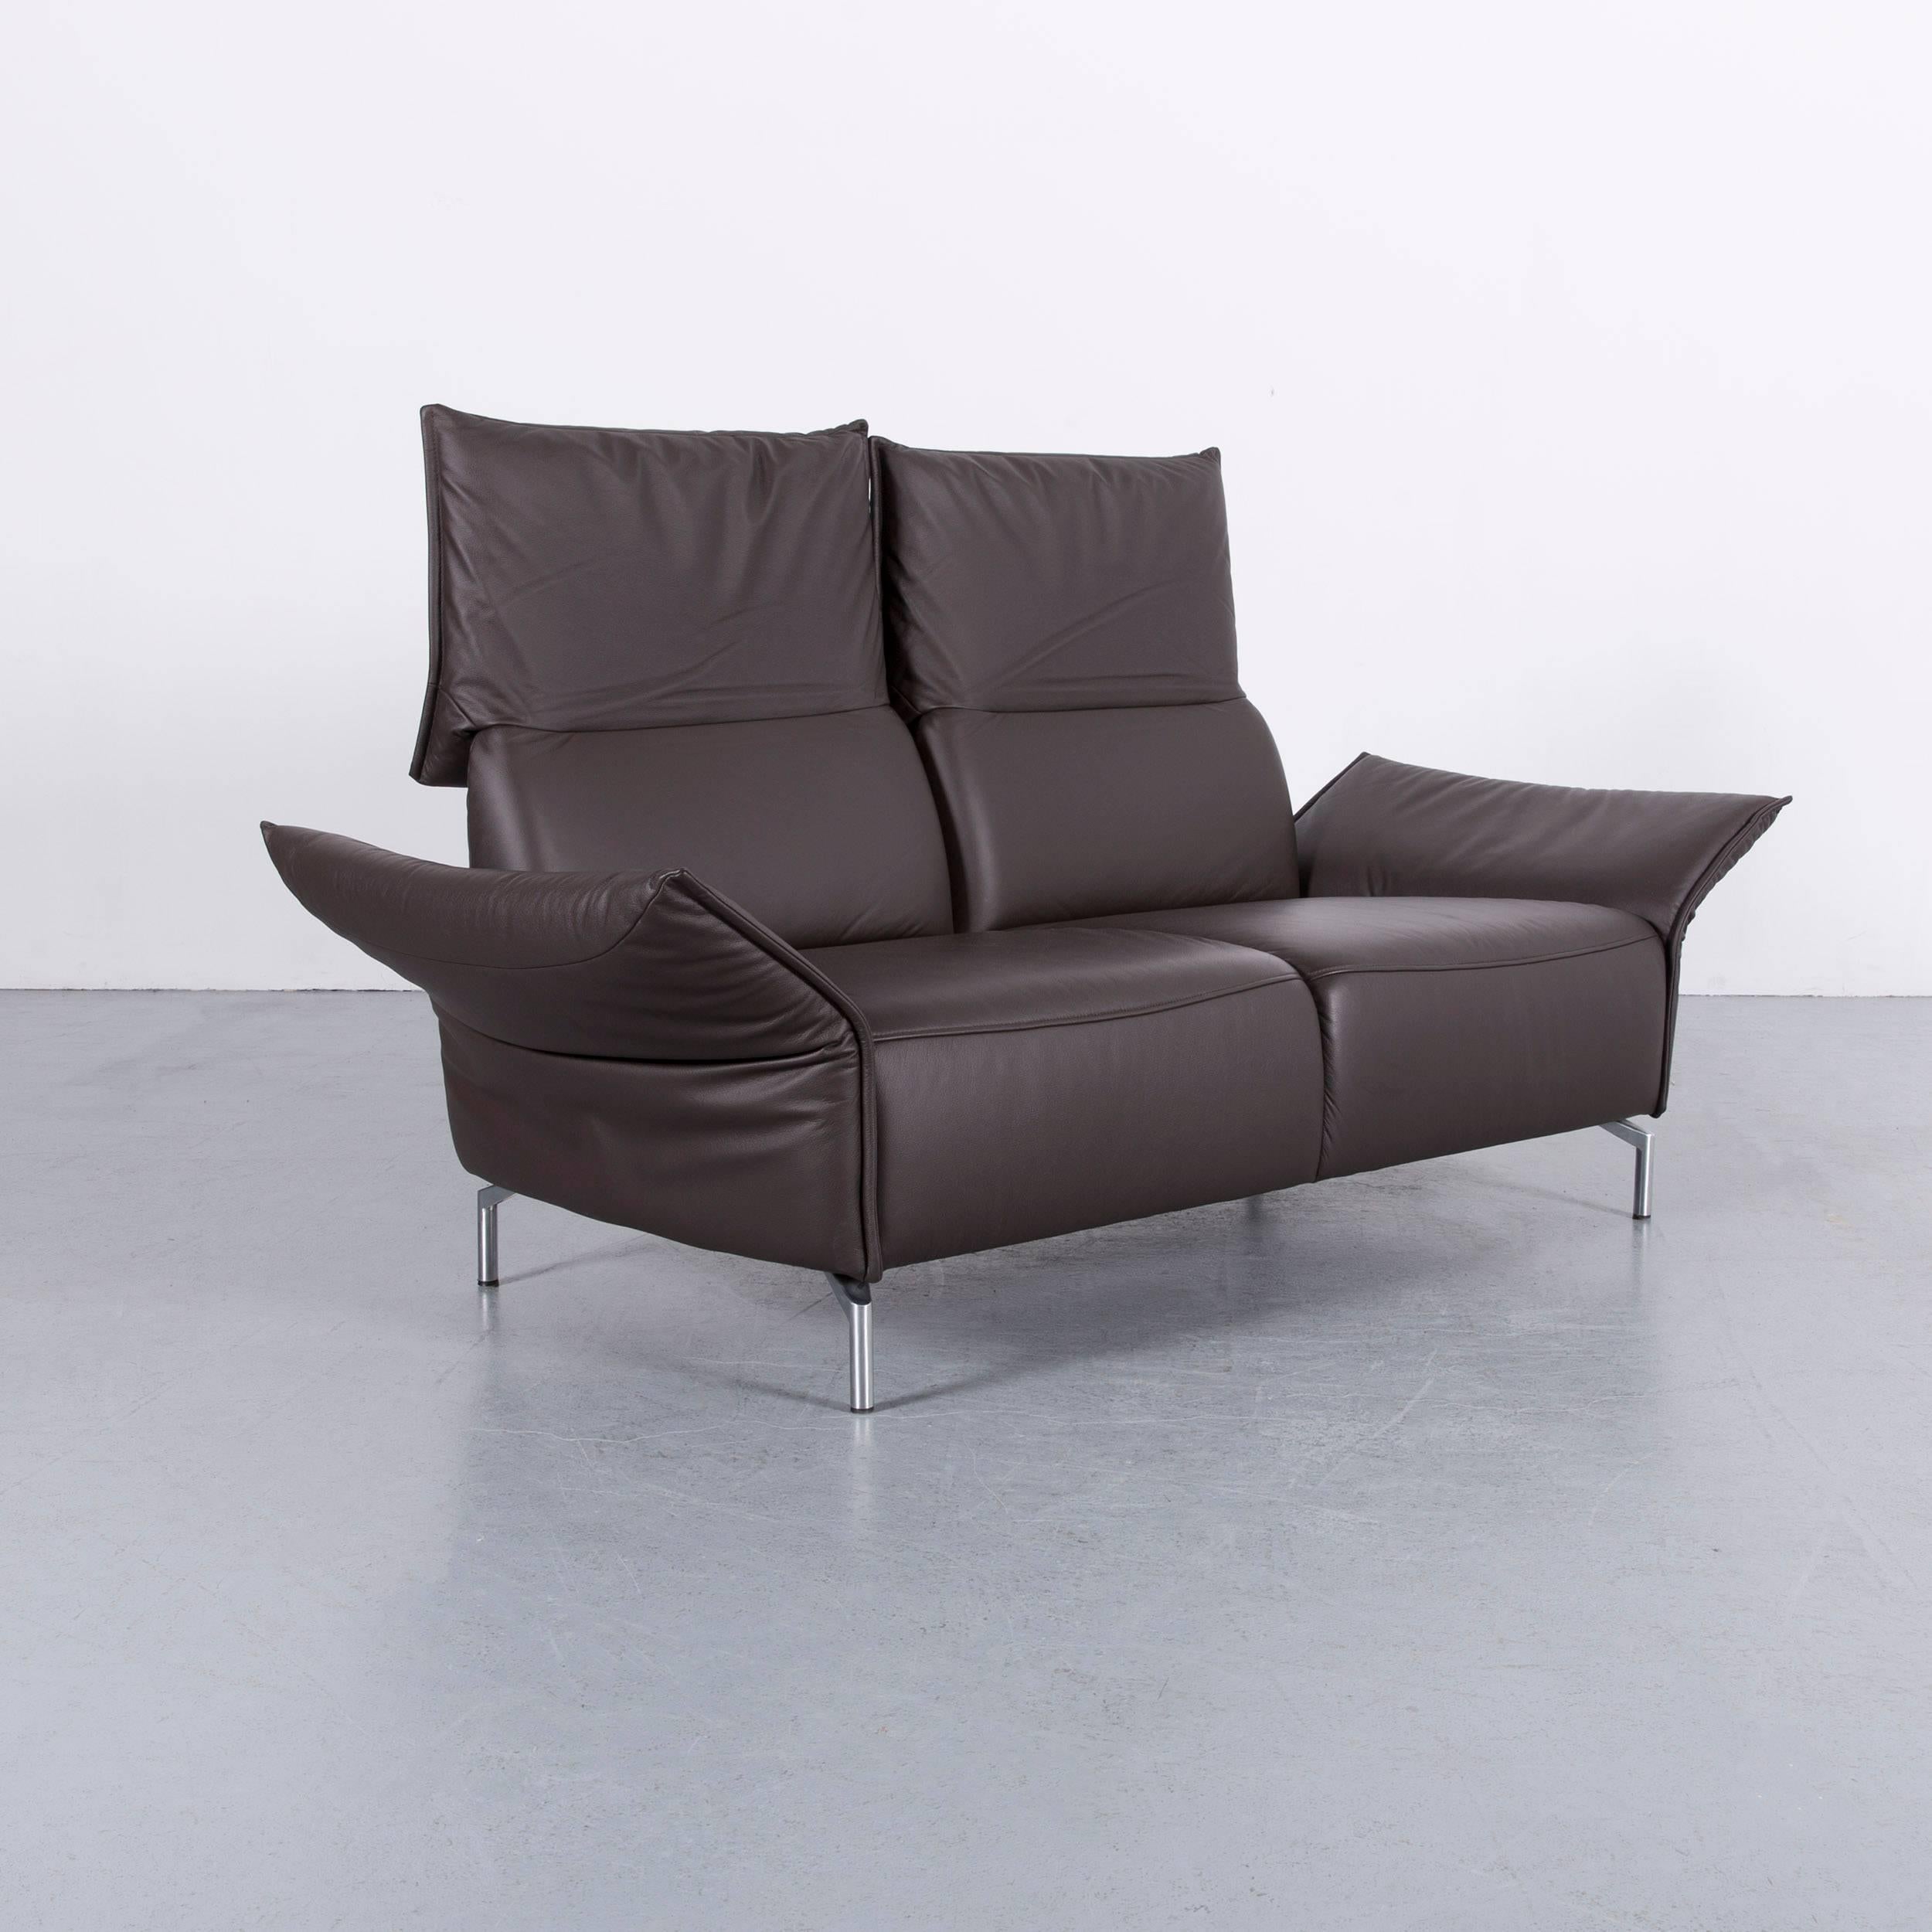 Koinor Vanda Two-Seat Sofa Brown Leather Function 2